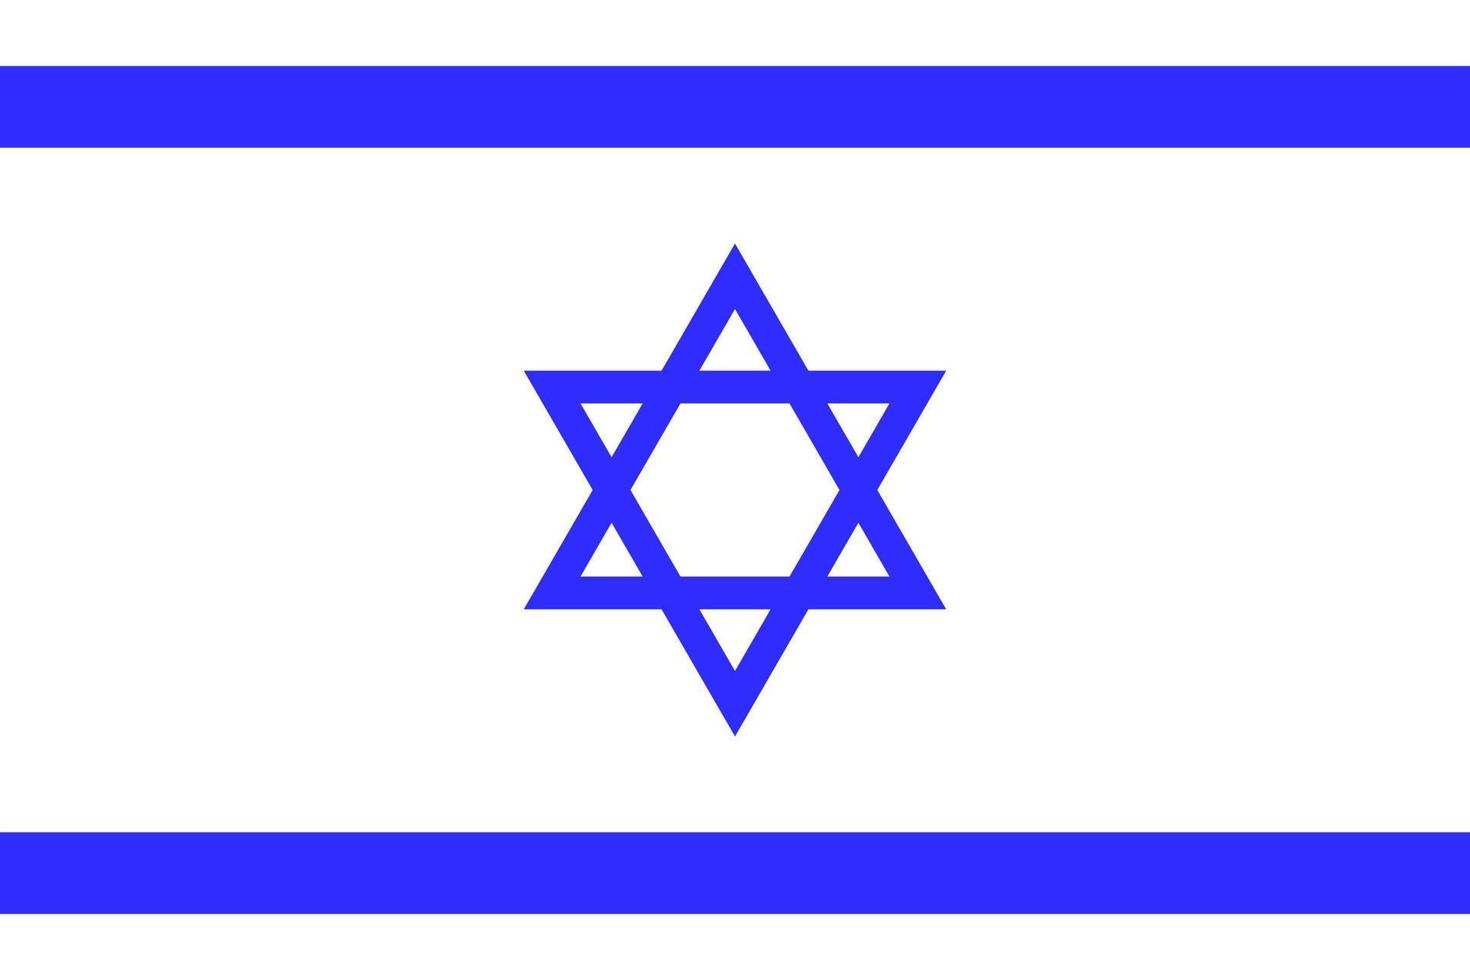 Israel bandeira. Israel bandeira vetor página símbolo para seu rede local projeto, Israel bandeira logotipo, aplicativo, ui. israelense bandeira vetor ilustração, eps10